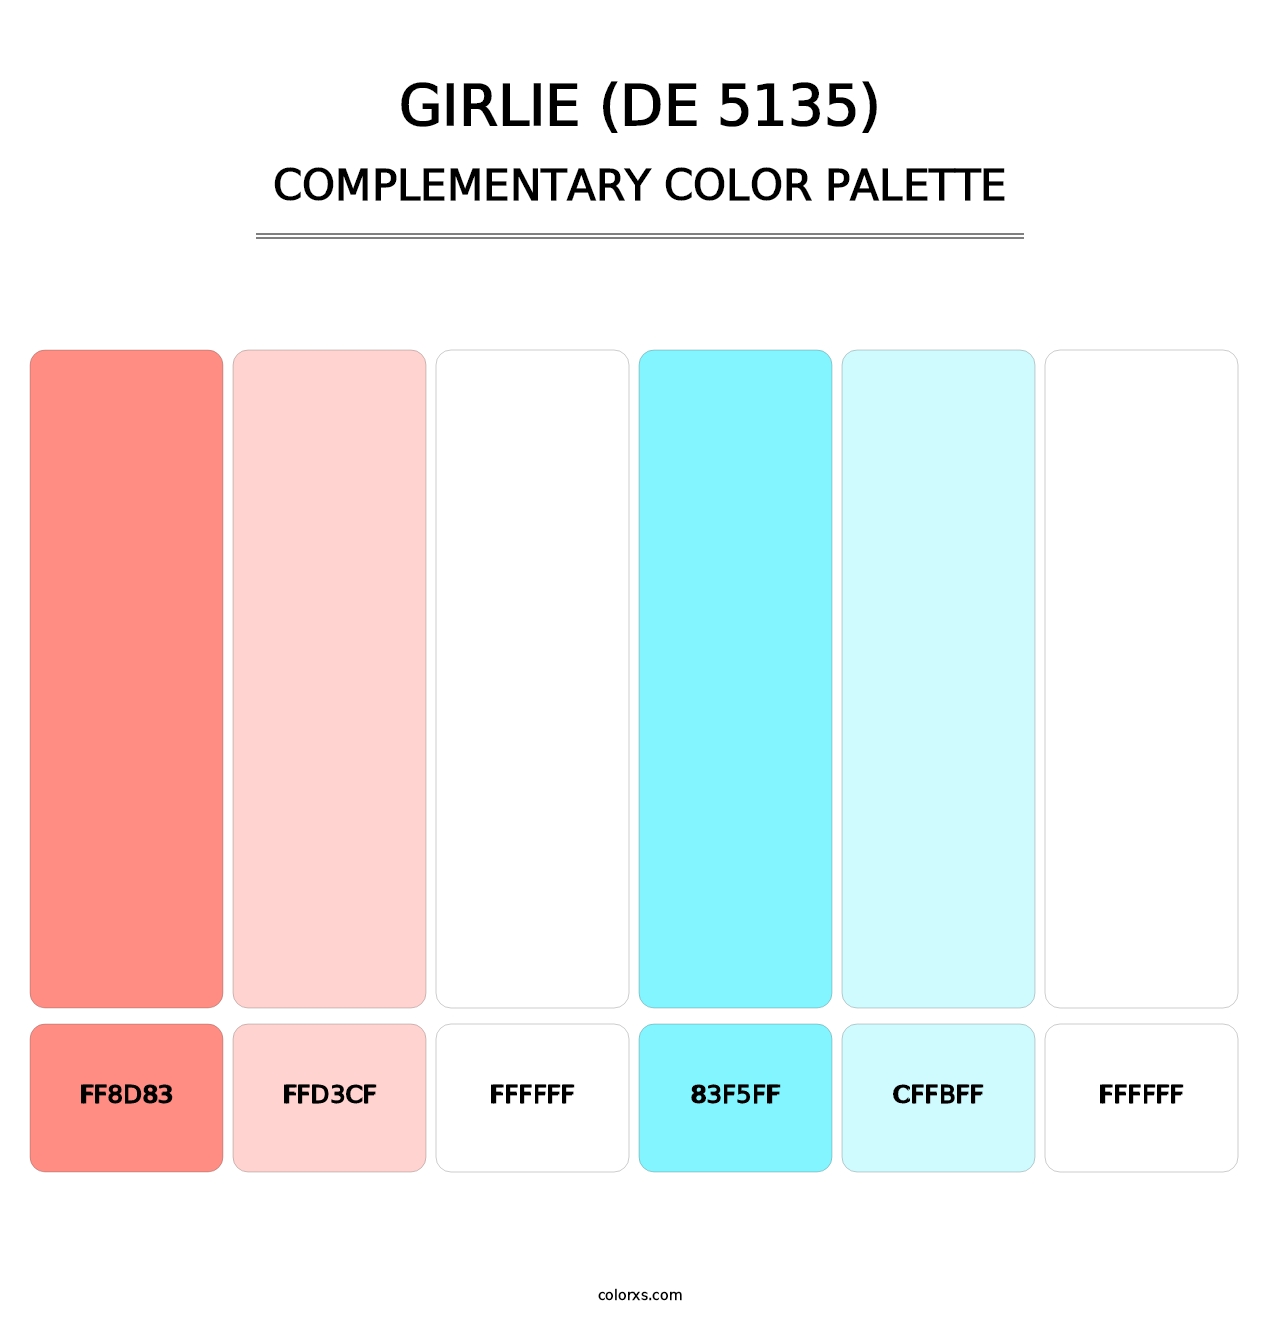 Girlie (DE 5135) - Complementary Color Palette